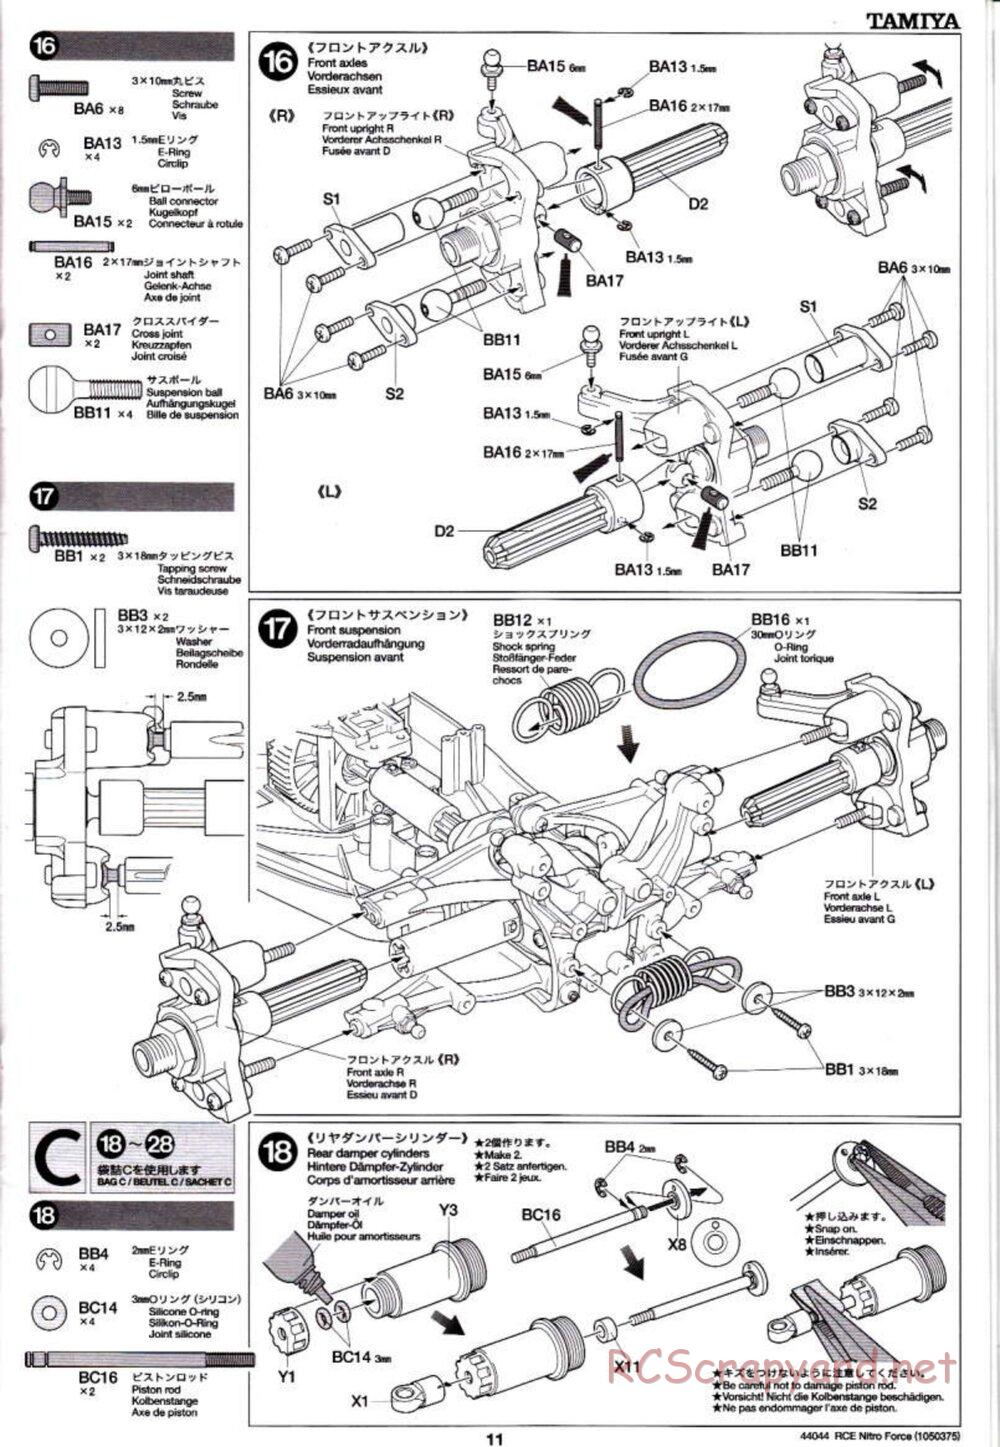 Tamiya - Nitro Force - NDF-01 Chassis - Manual - Page 11